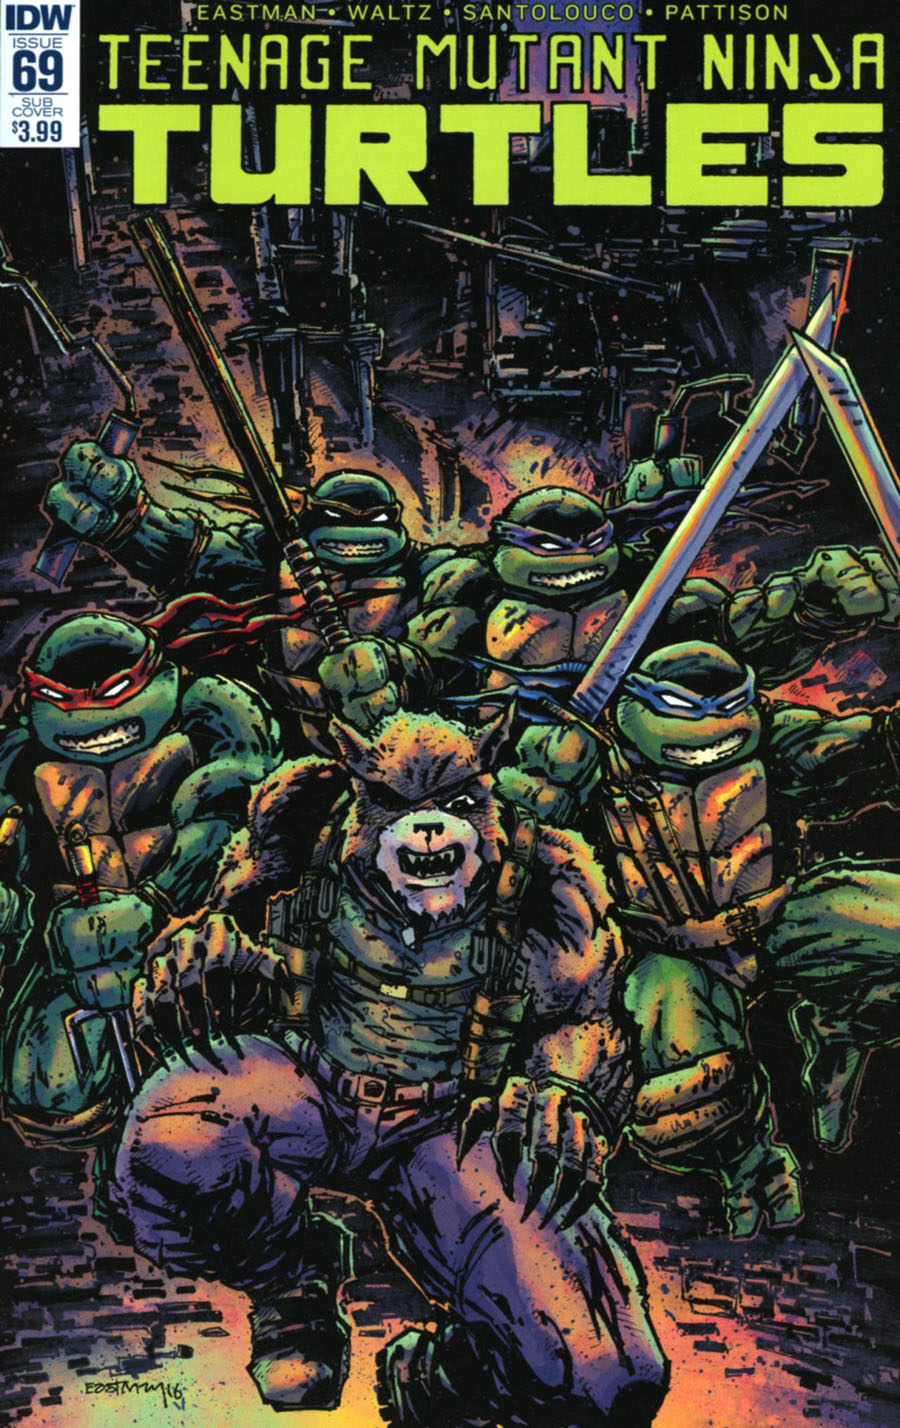 Teenage Mutant Ninja Turtles Vol 5 #69 Cover B Variant Kevin Eastman Subscription Cover